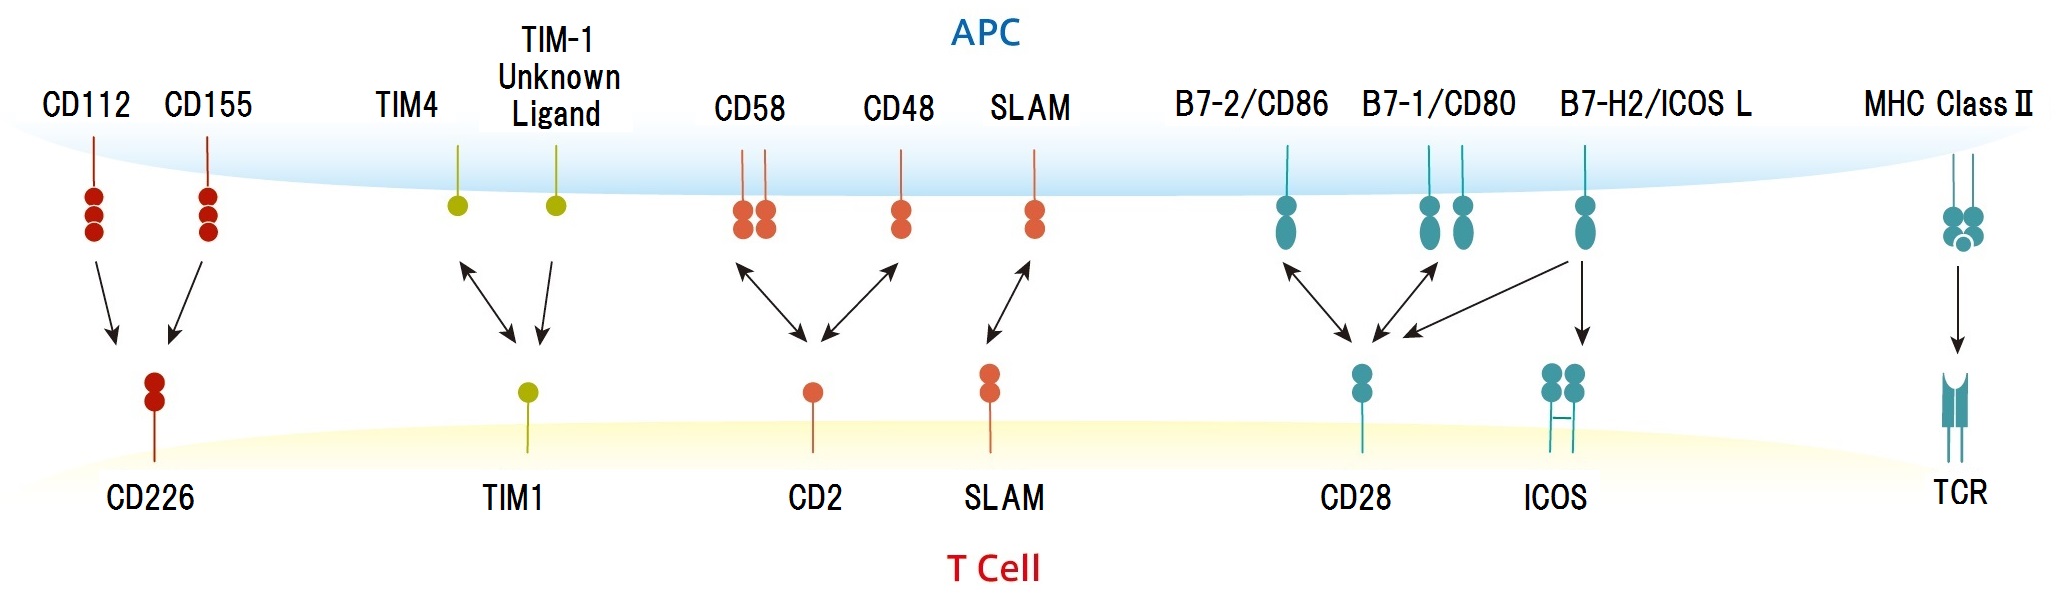 Immunoglobulin Superfamily (IgSF) Co-Stimulatory Signalのイメージ図